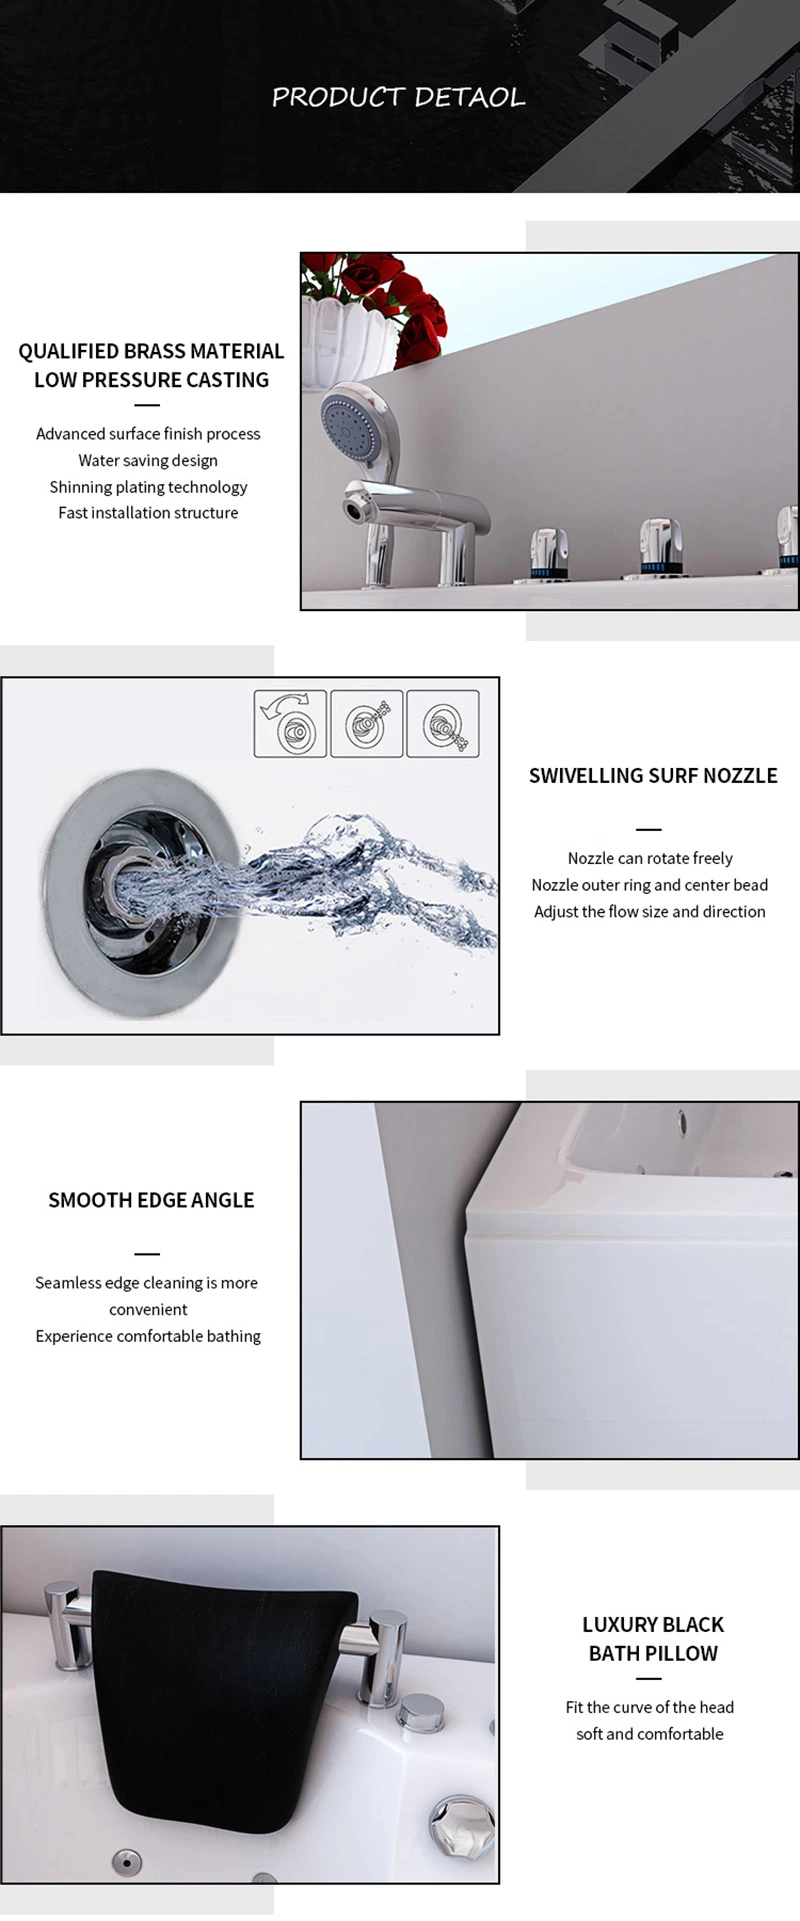 Whirlpool Bathtubs Freestanding White Acrylic Price Baby Bath Seat for Bathroom Tub and Shower